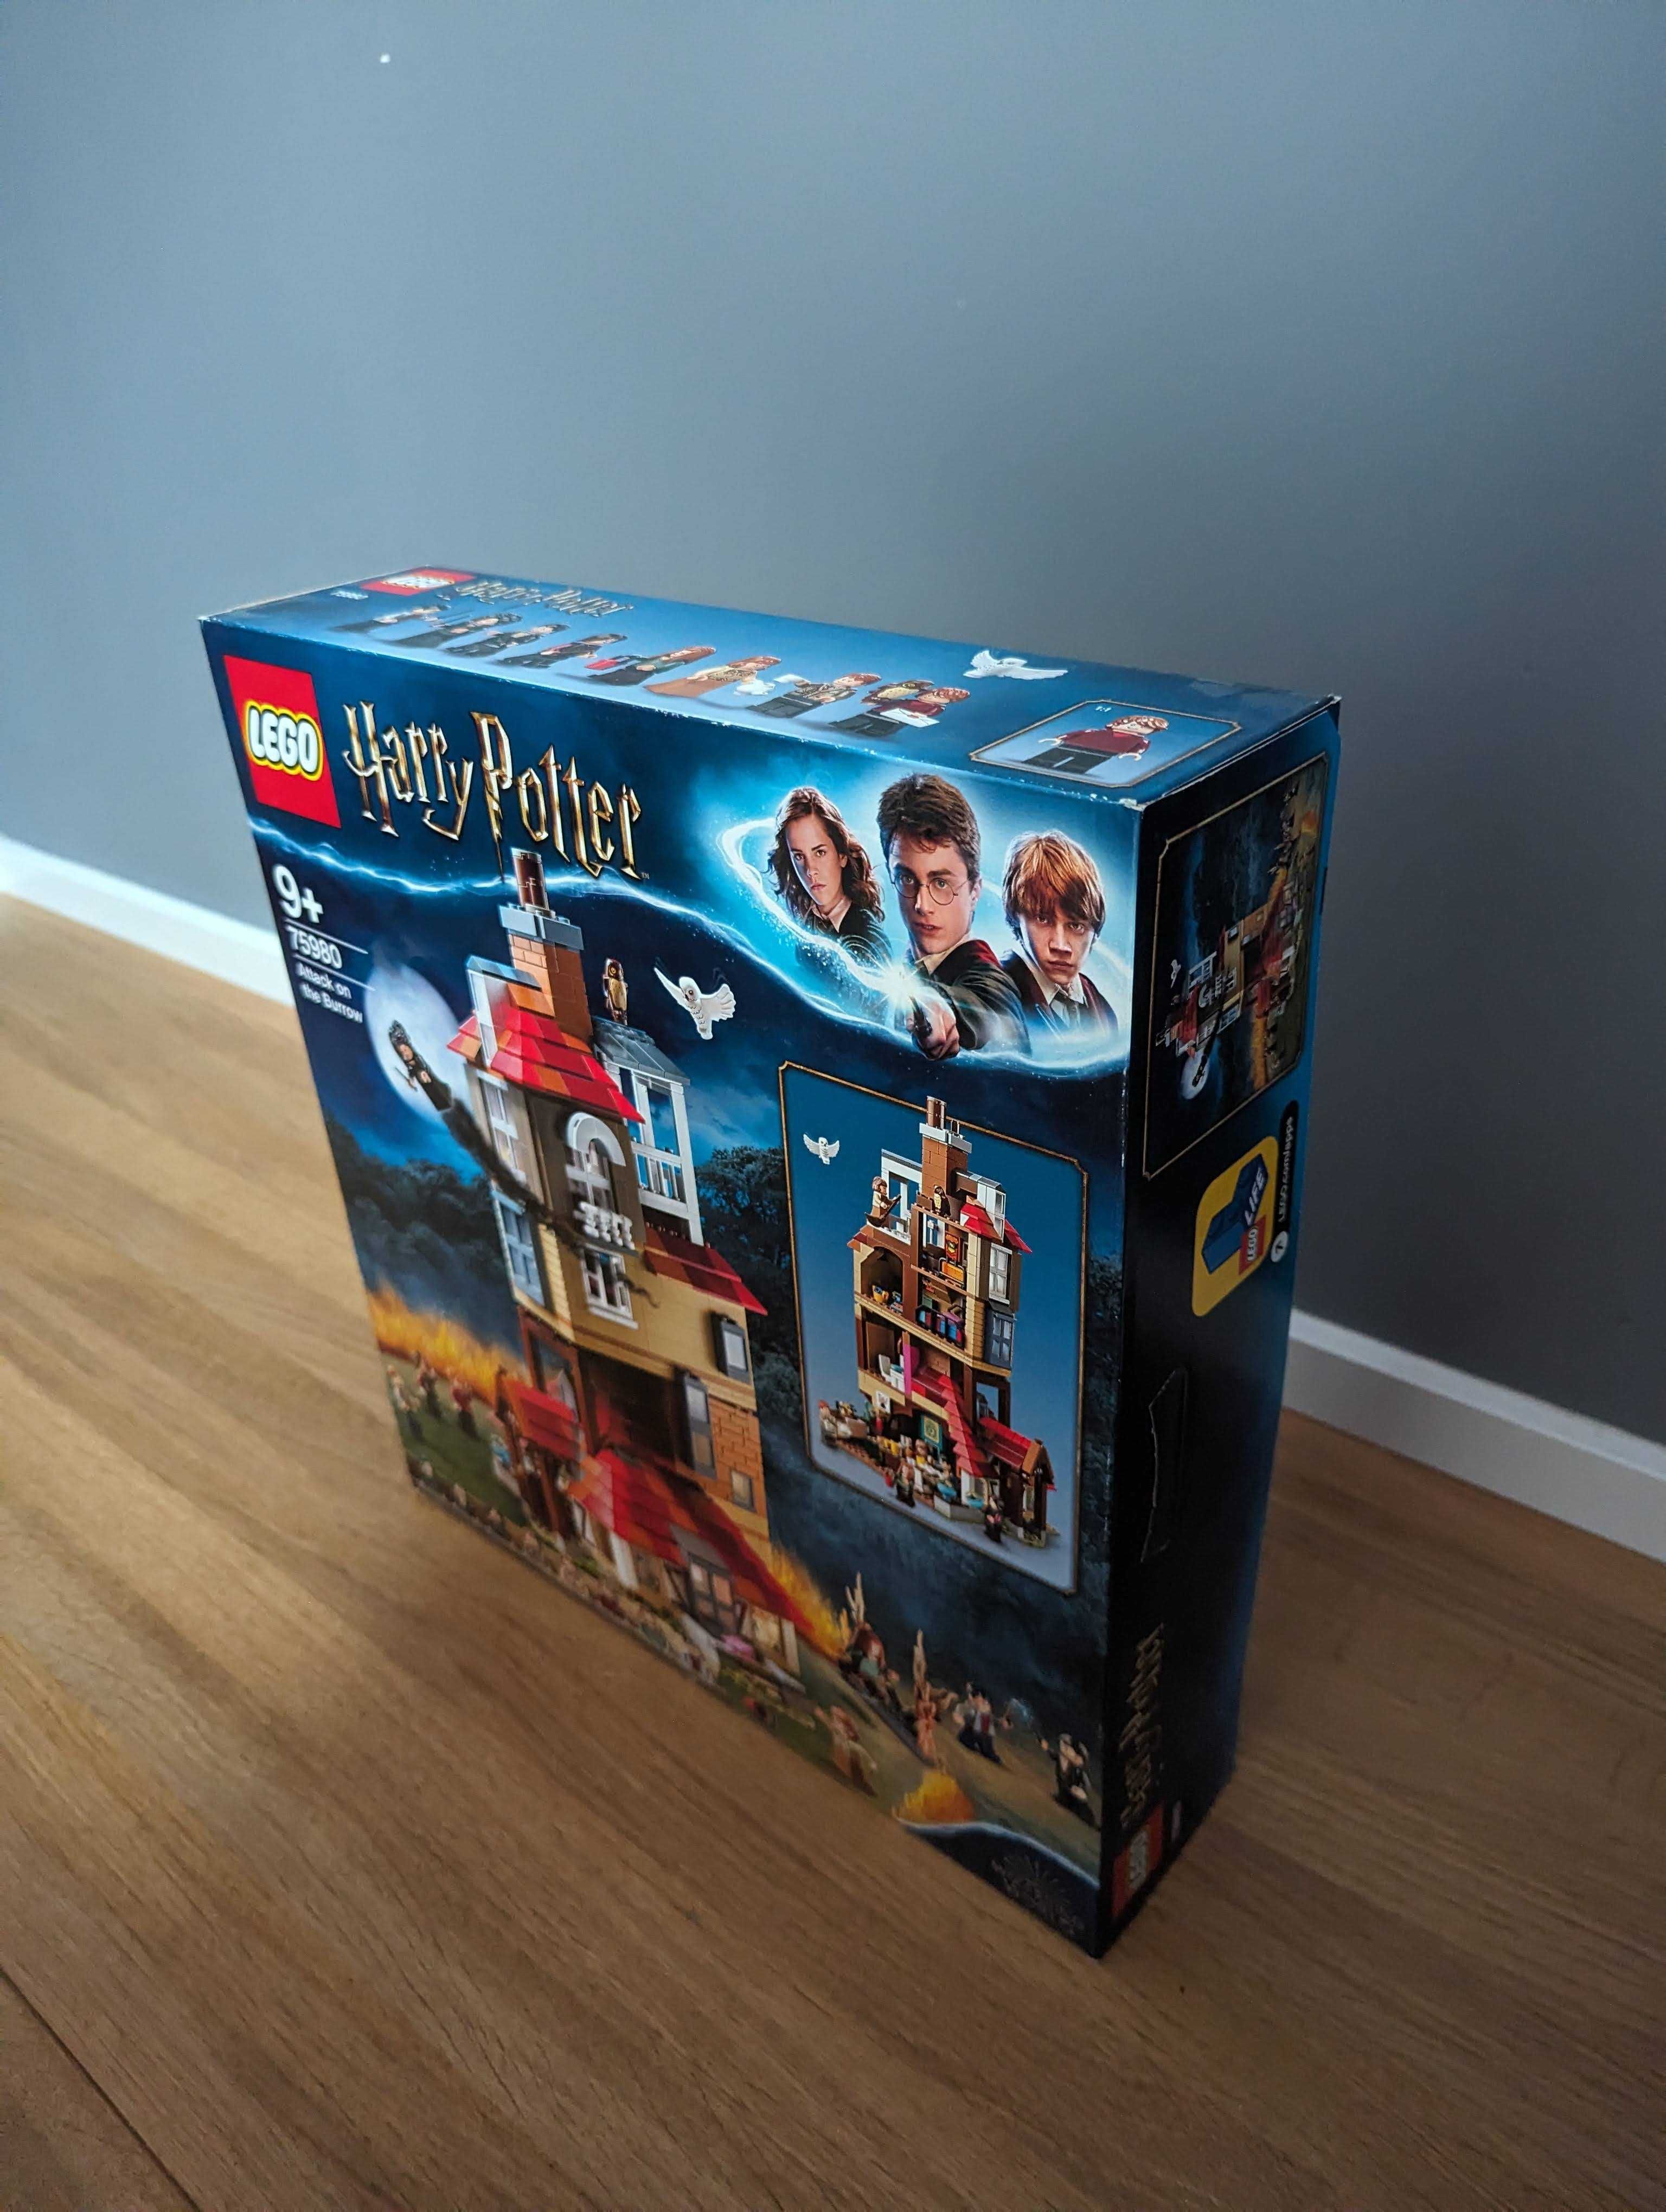 75980 Lego Harry Potter - Atak na Norę [Attack on the Burrow]